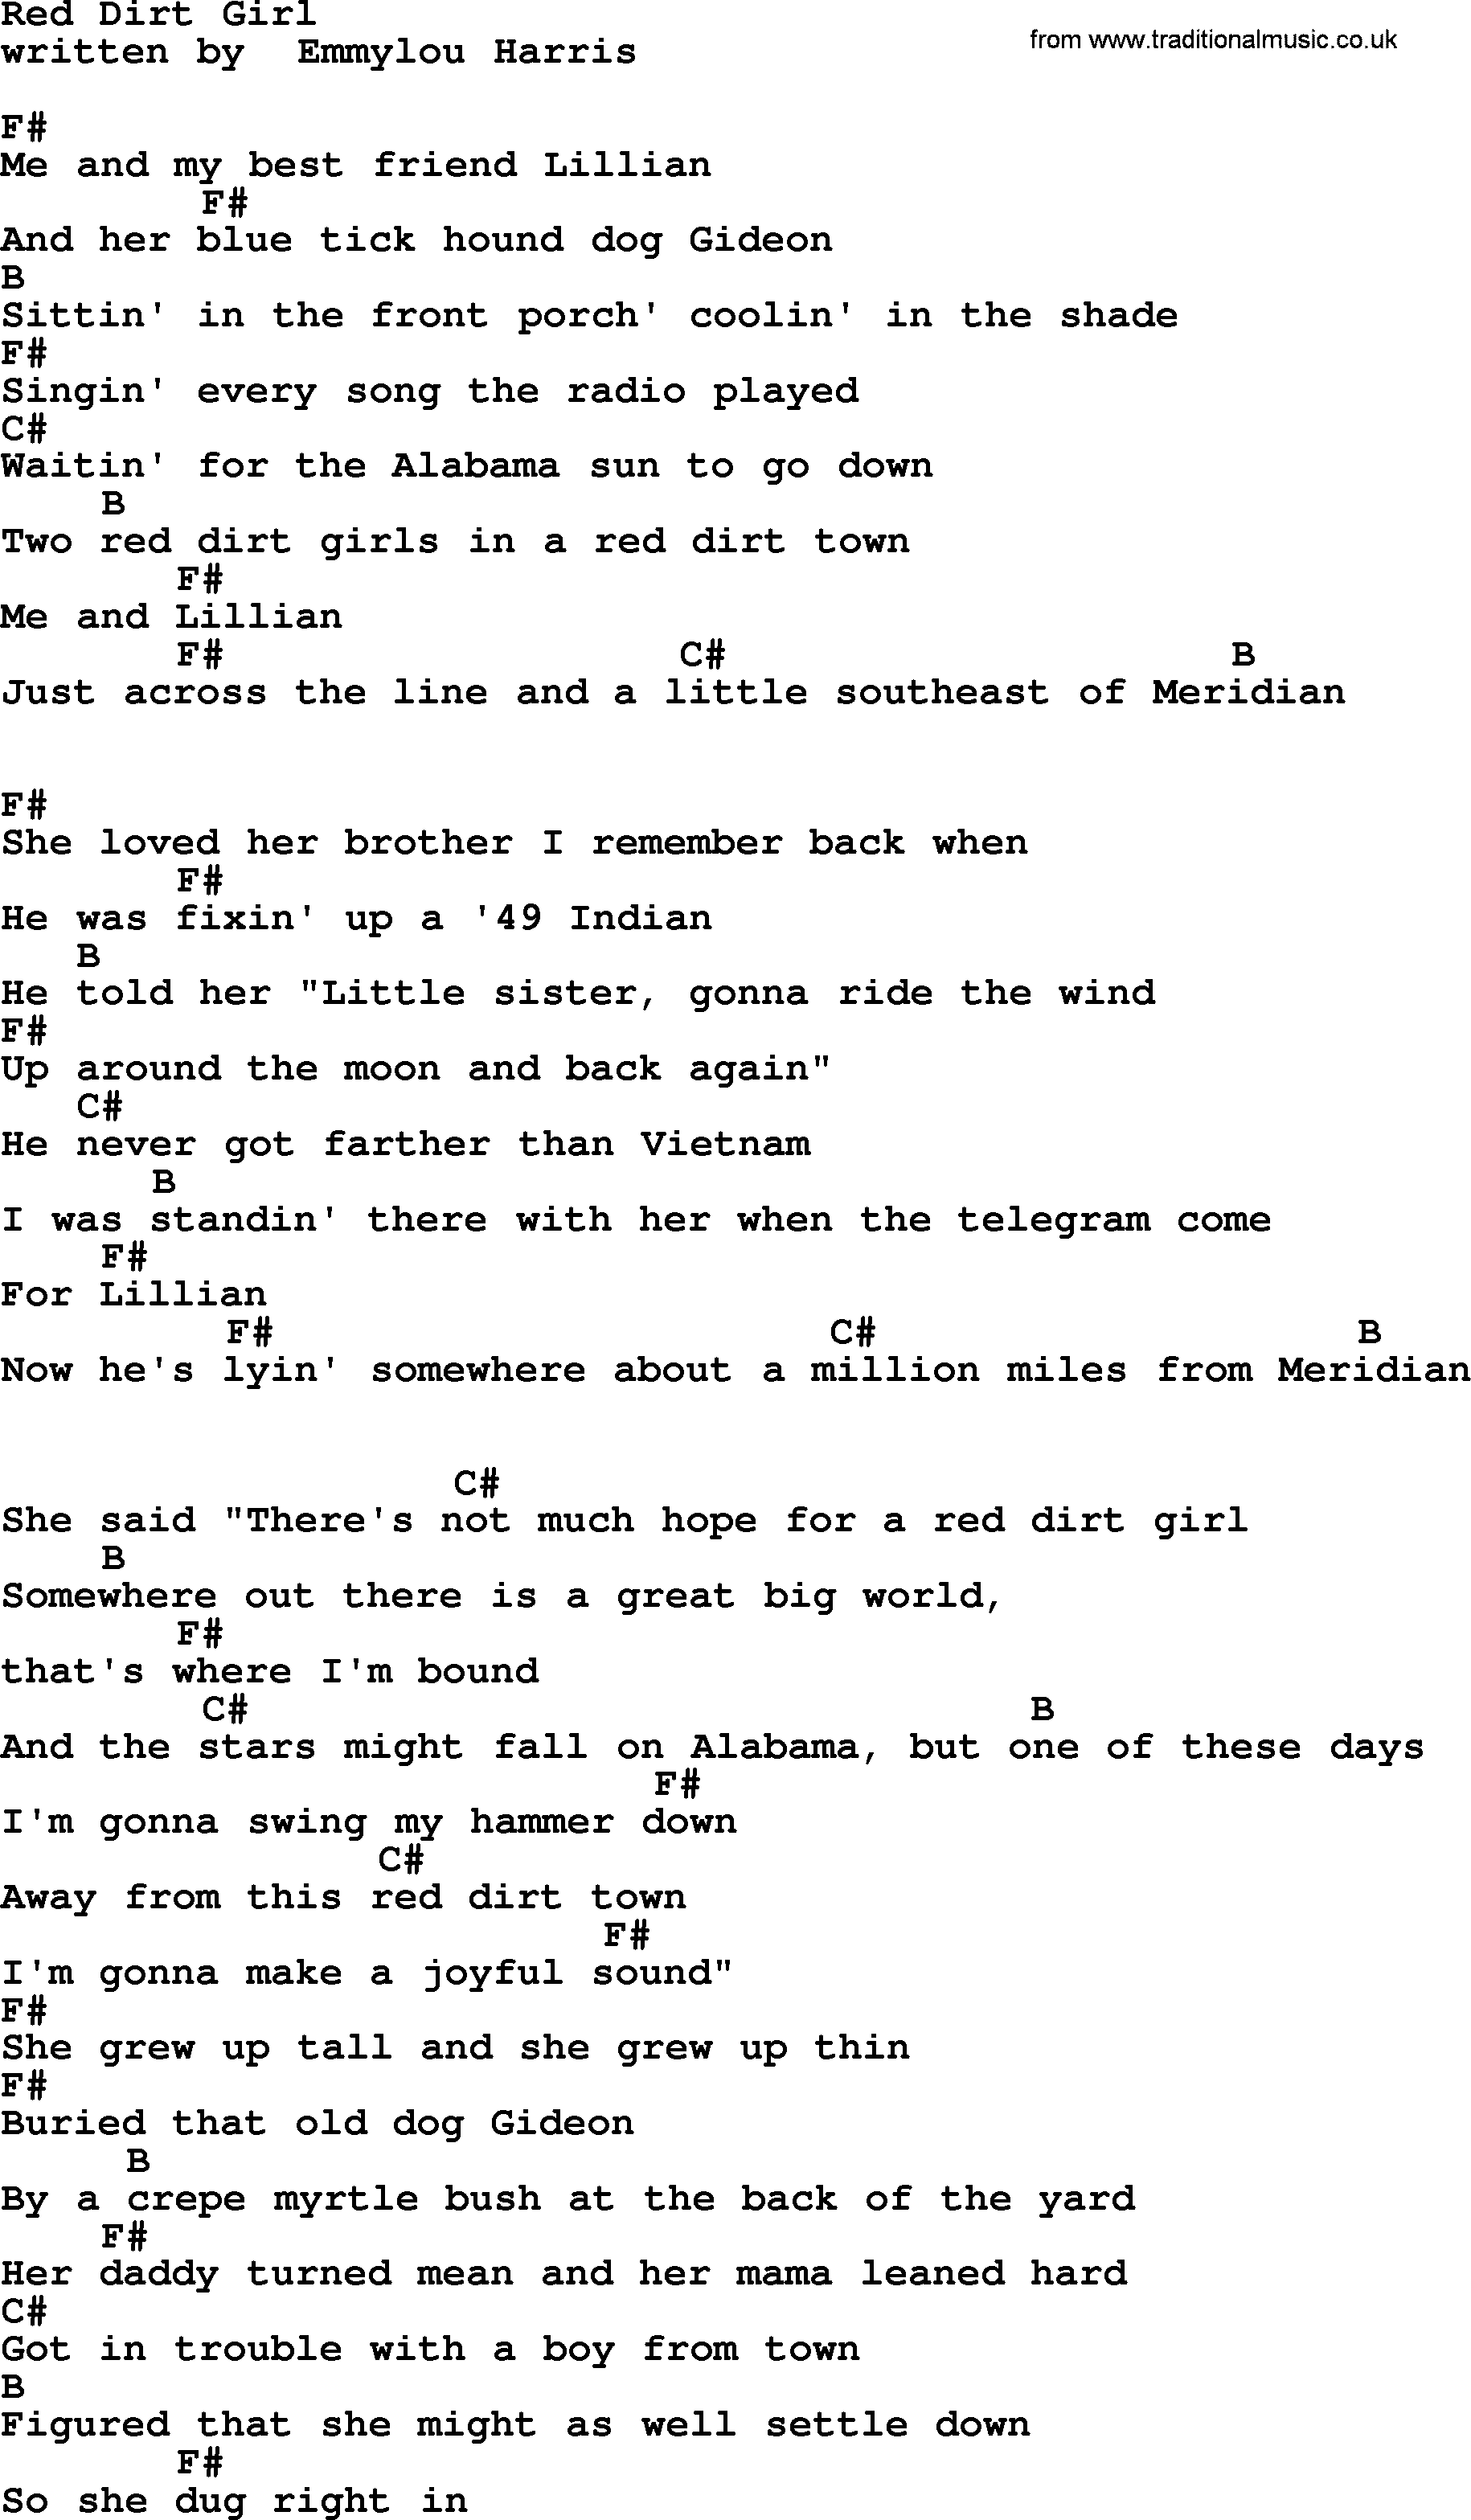 Emmylou Harris song: Red Dirt Girl lyrics and chords